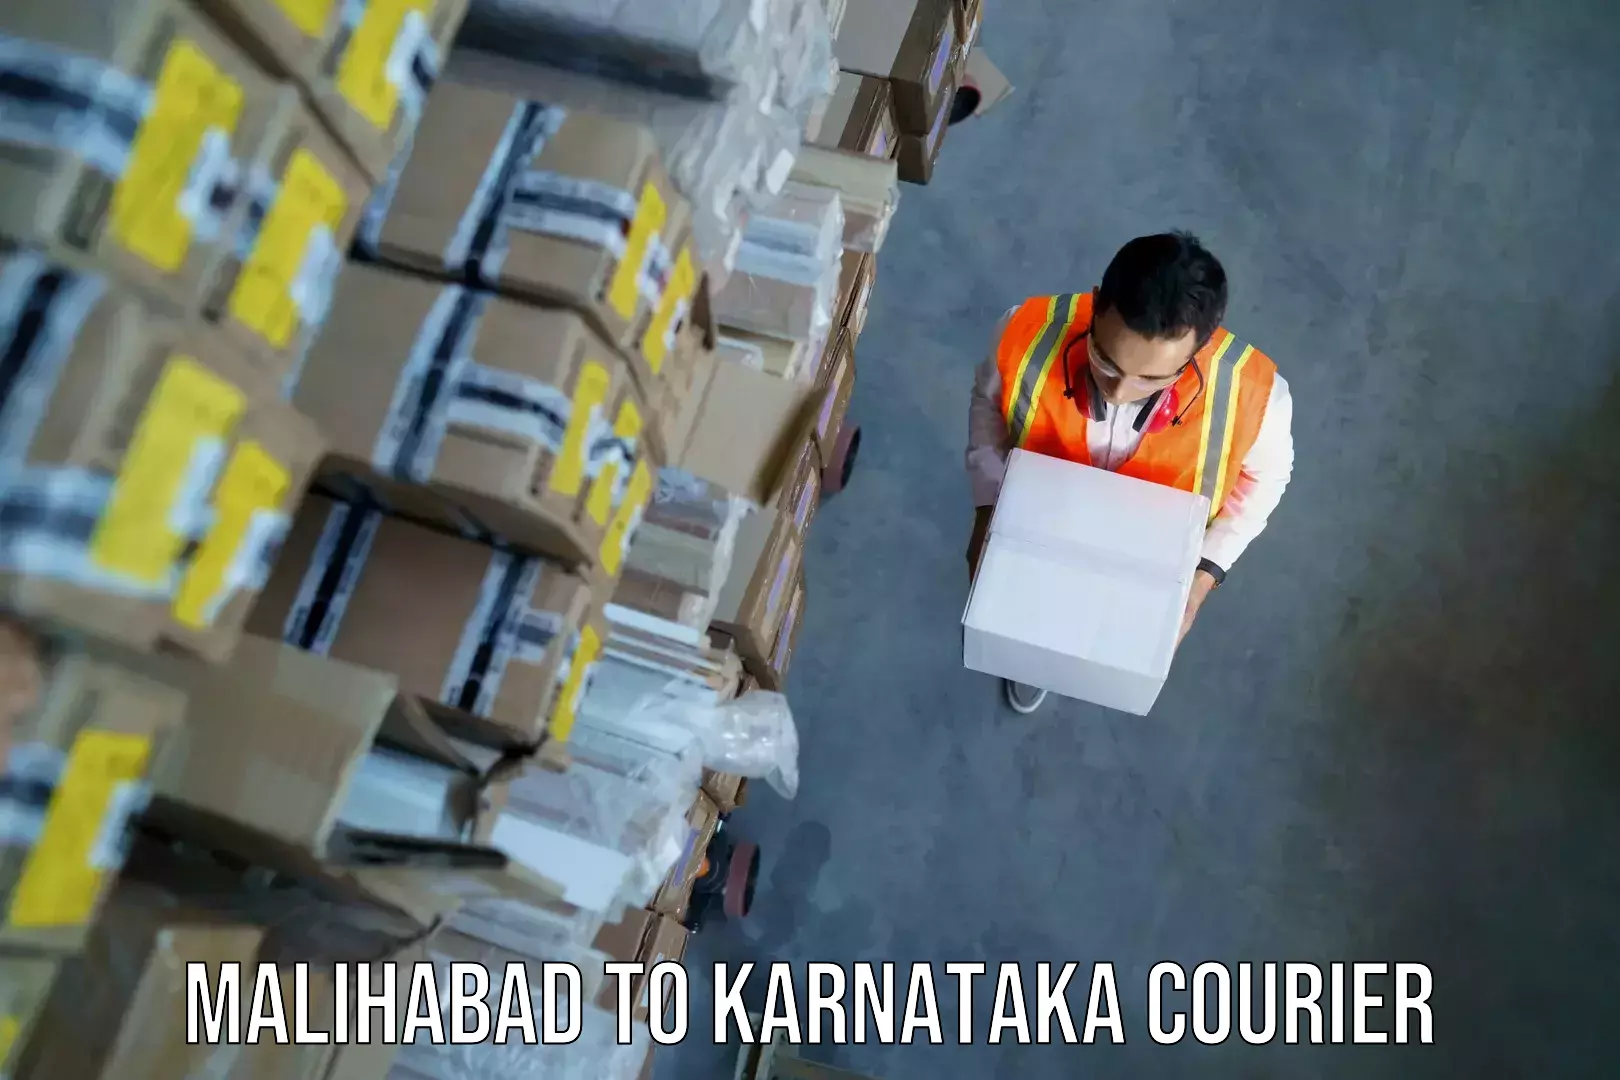 Baggage shipping experts Malihabad to Kollegal